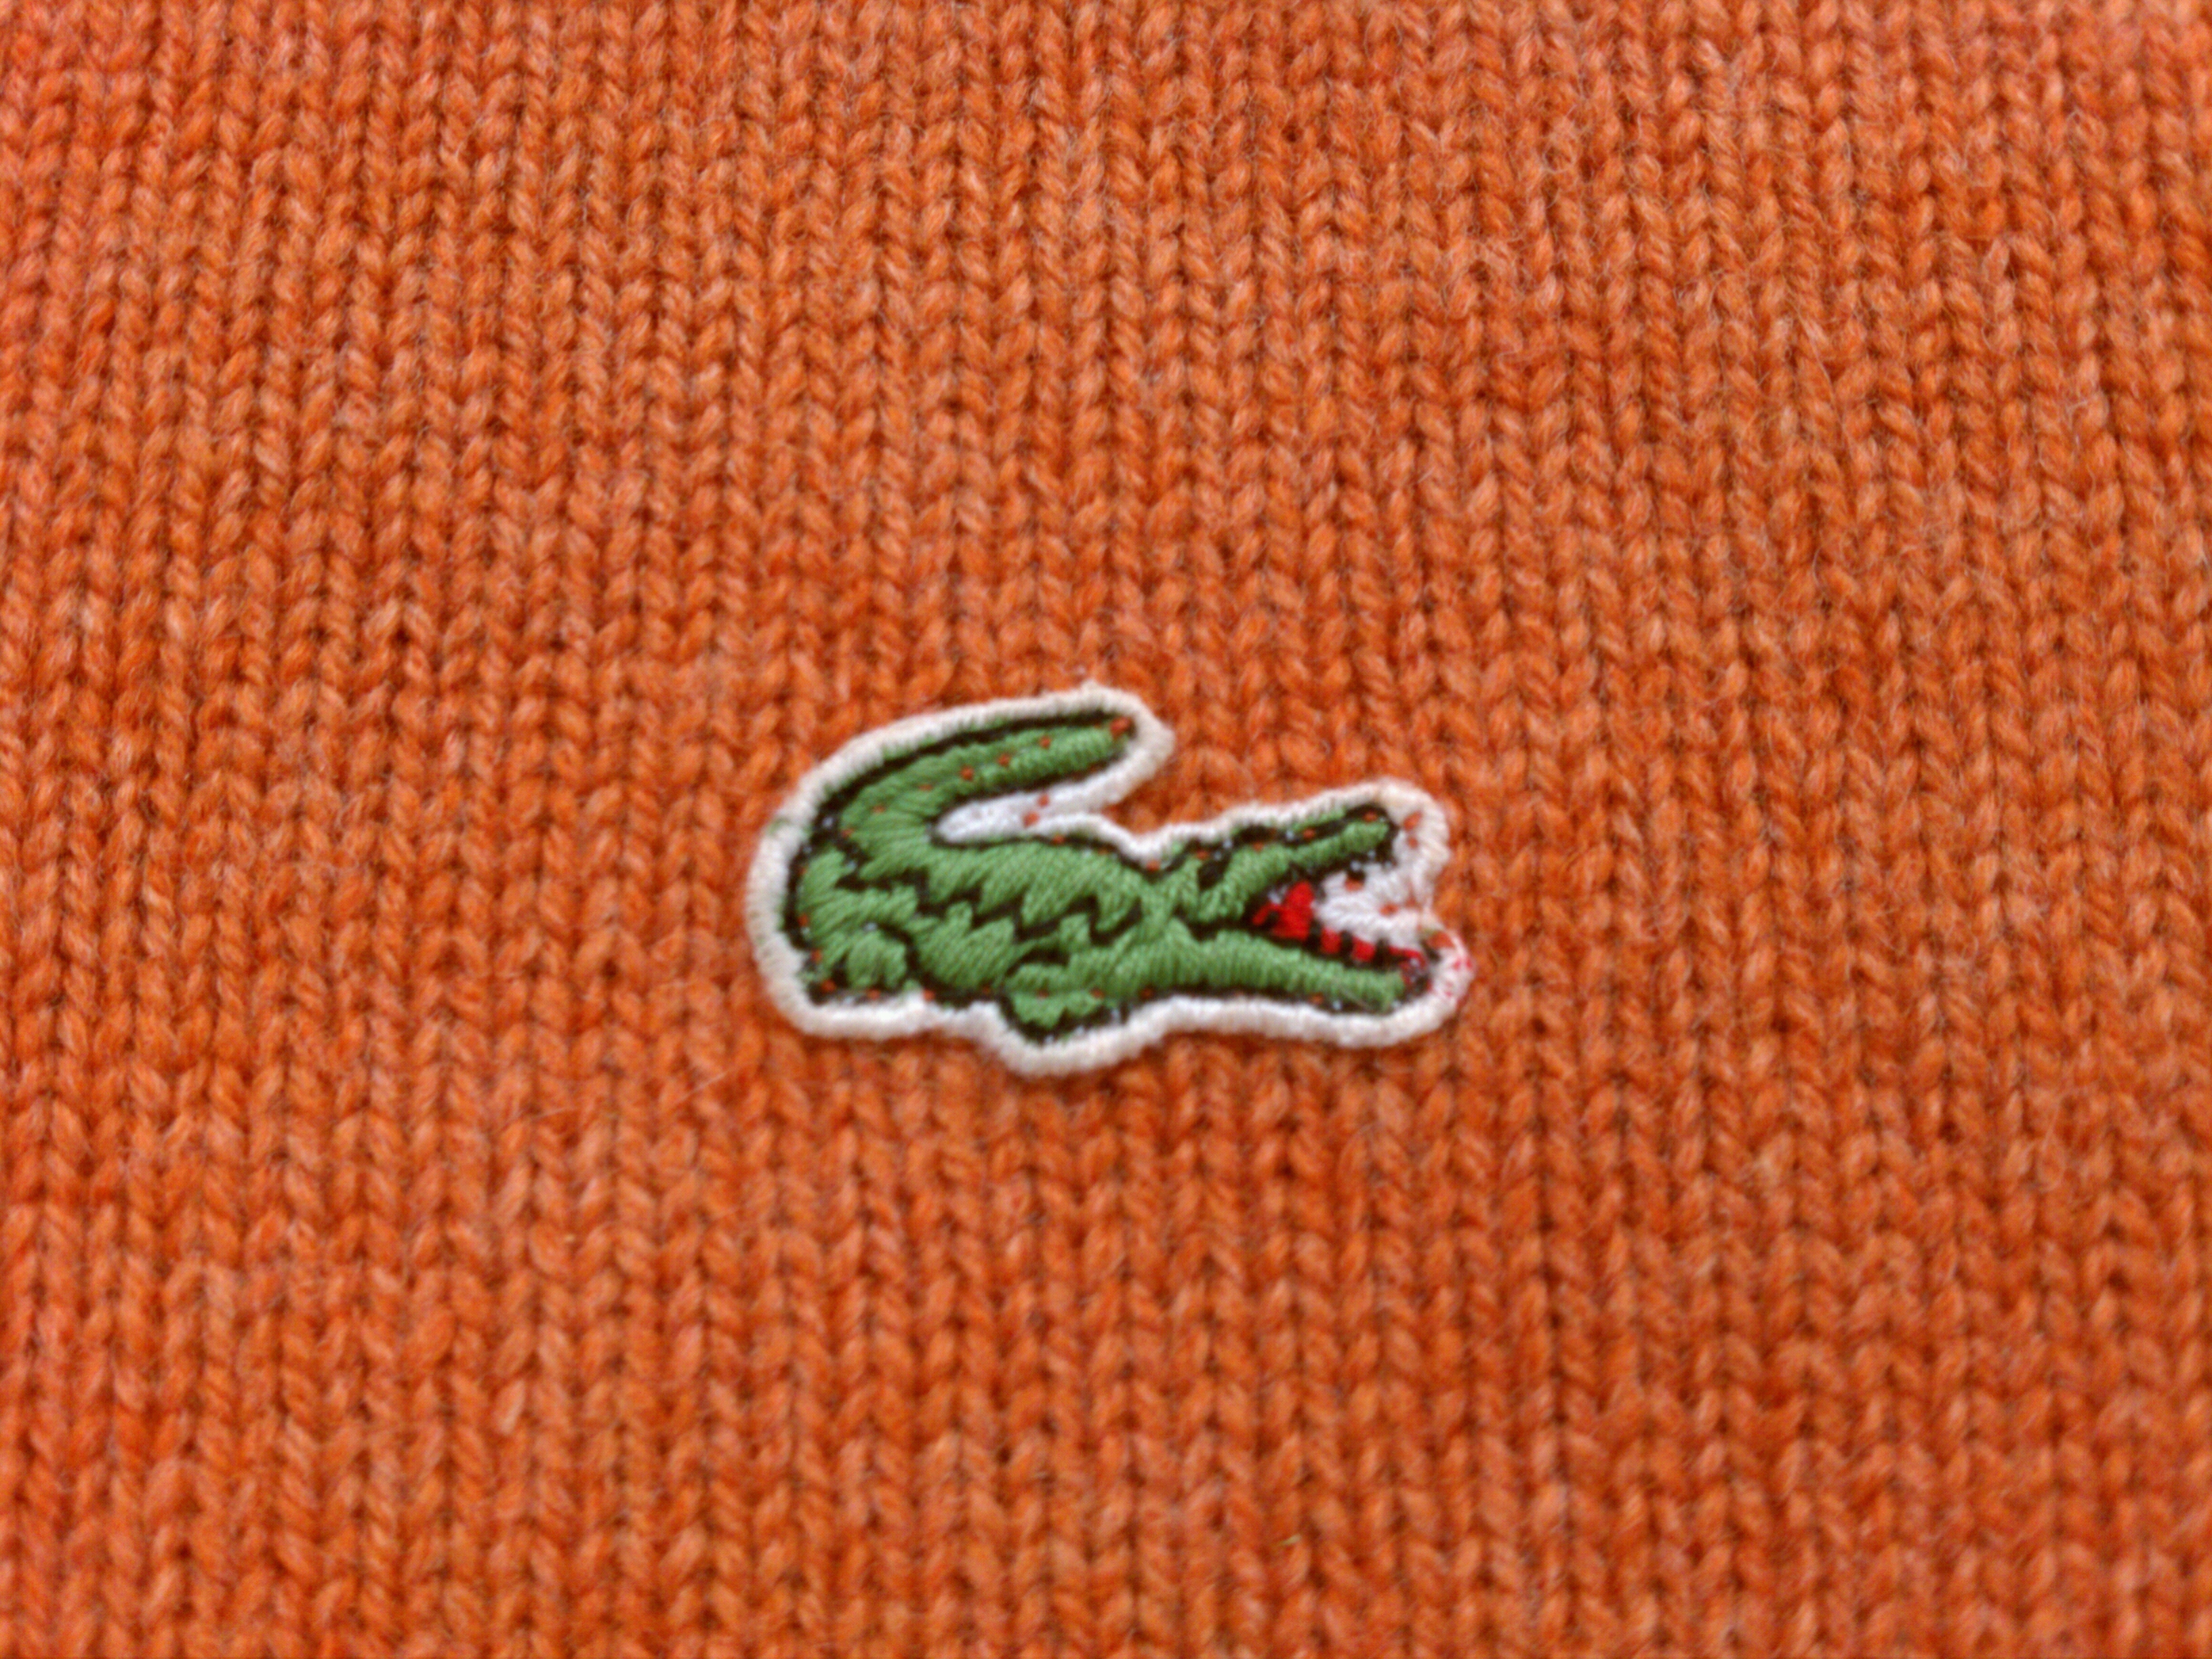 izod alligator logo